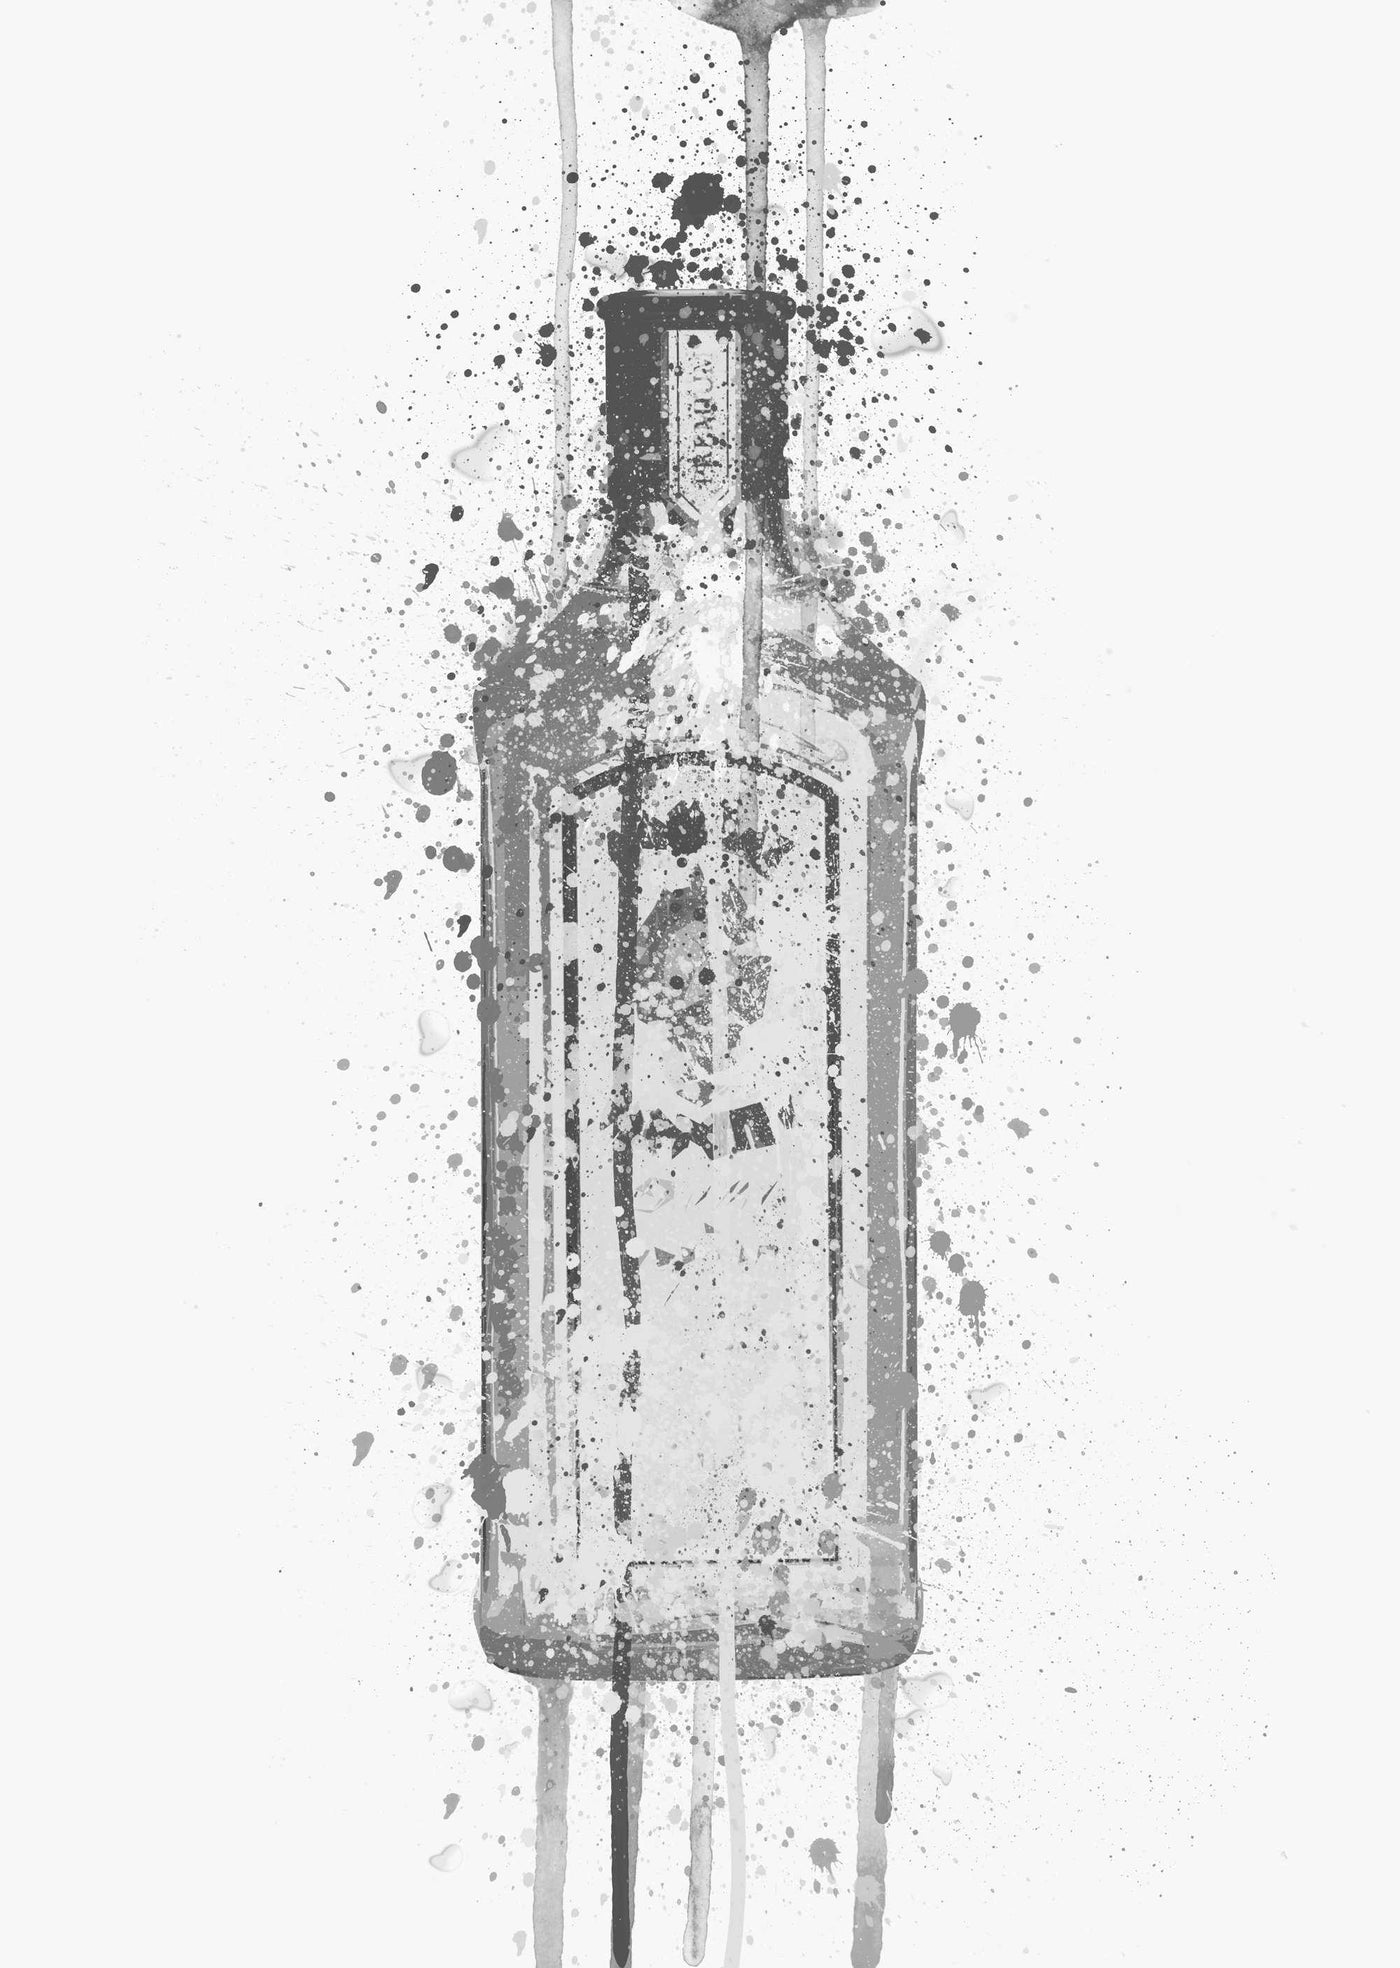 Gin Bottle Wall Art 'Ocean Blue' (Grey Edition)-We Love Prints